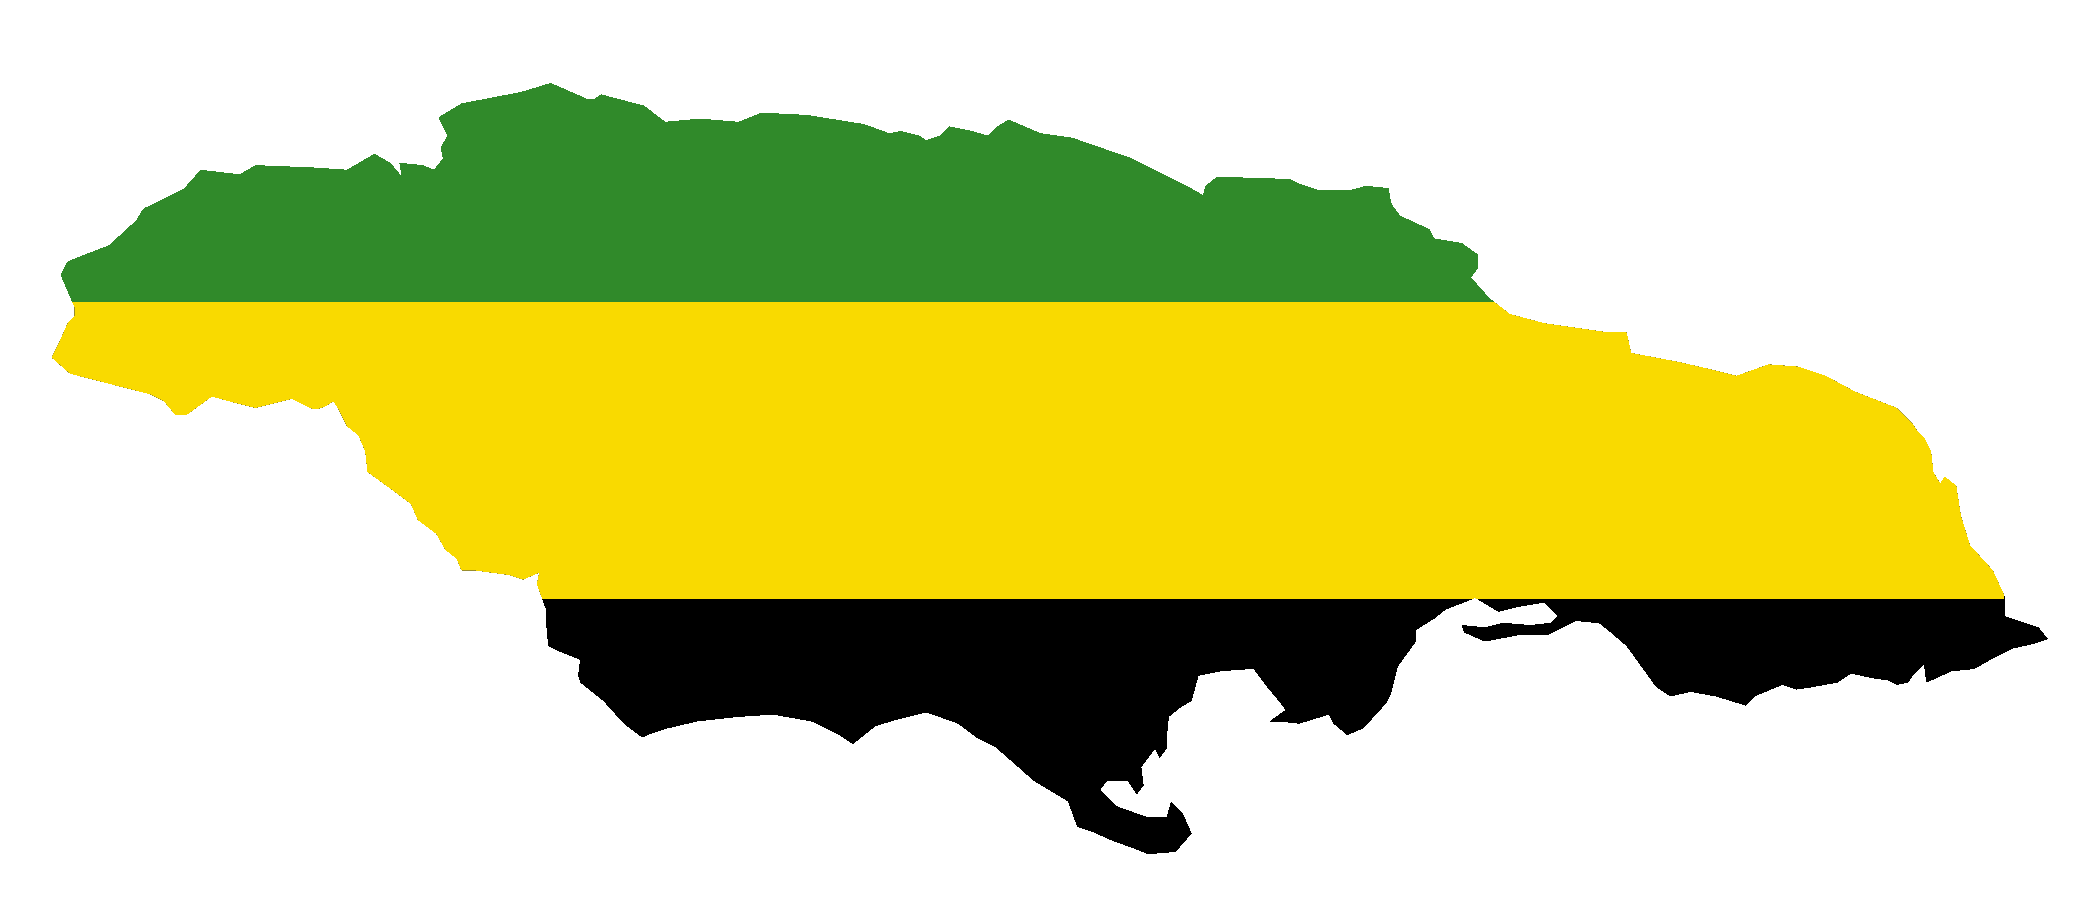 Jamaica Flag Transparent Images